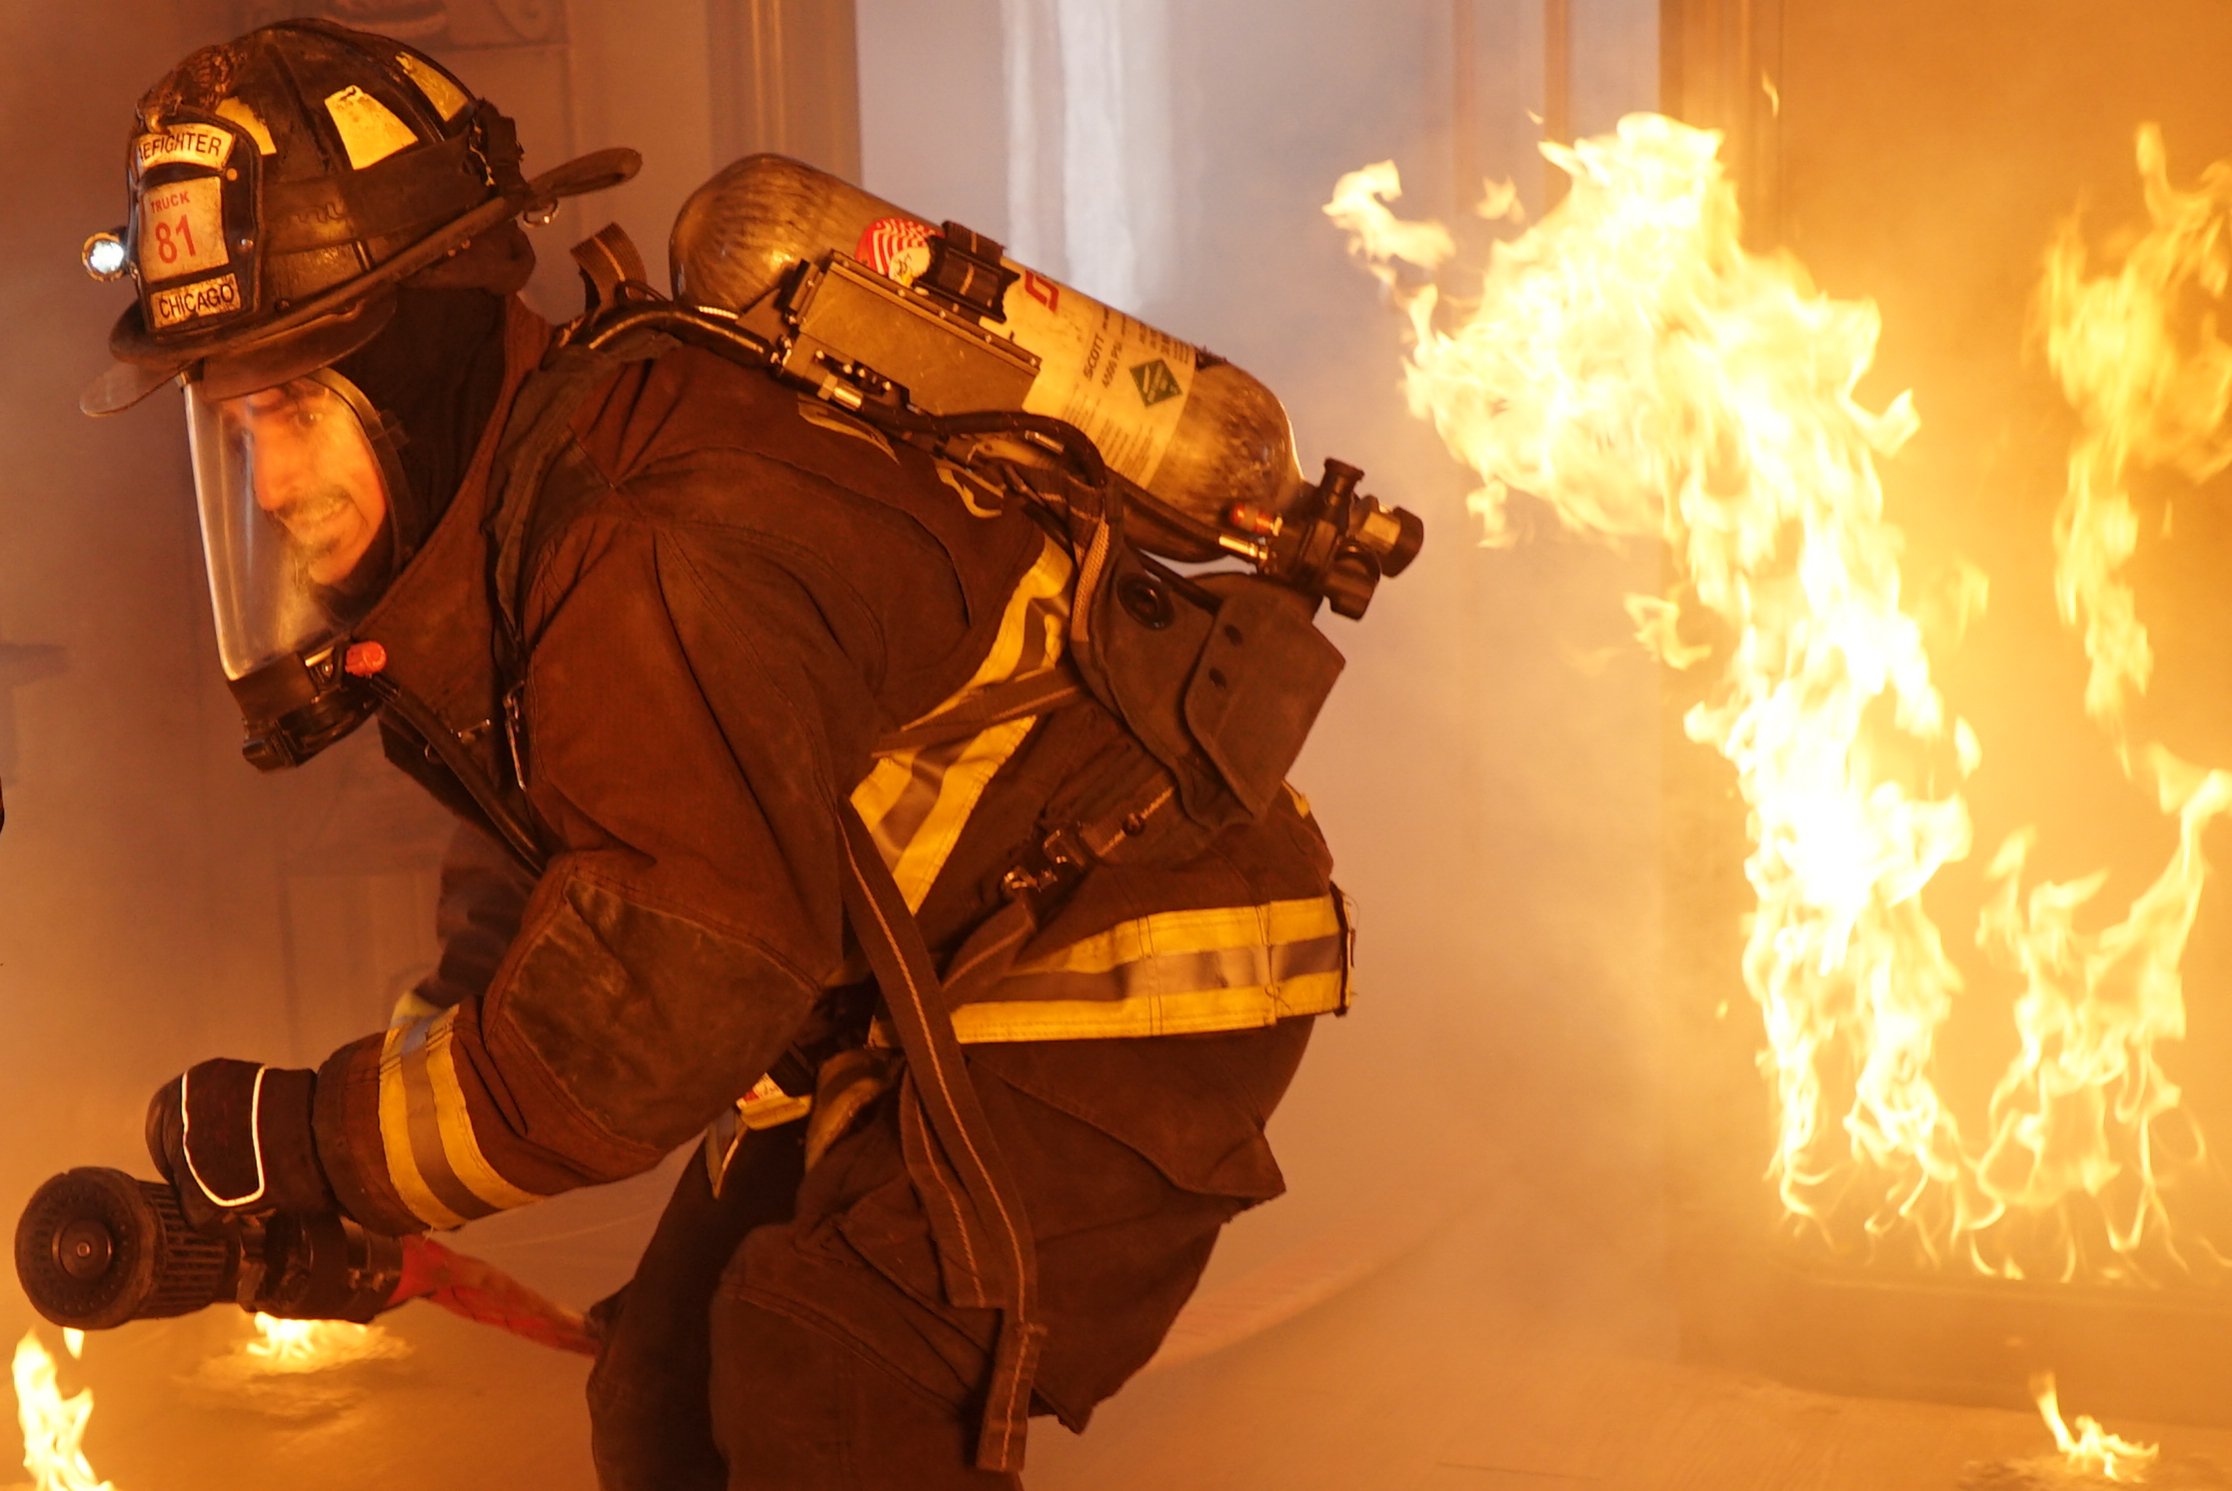 Yuri Sardarov as Otis battles a blaze in season 3 of 'Chicago Fire'